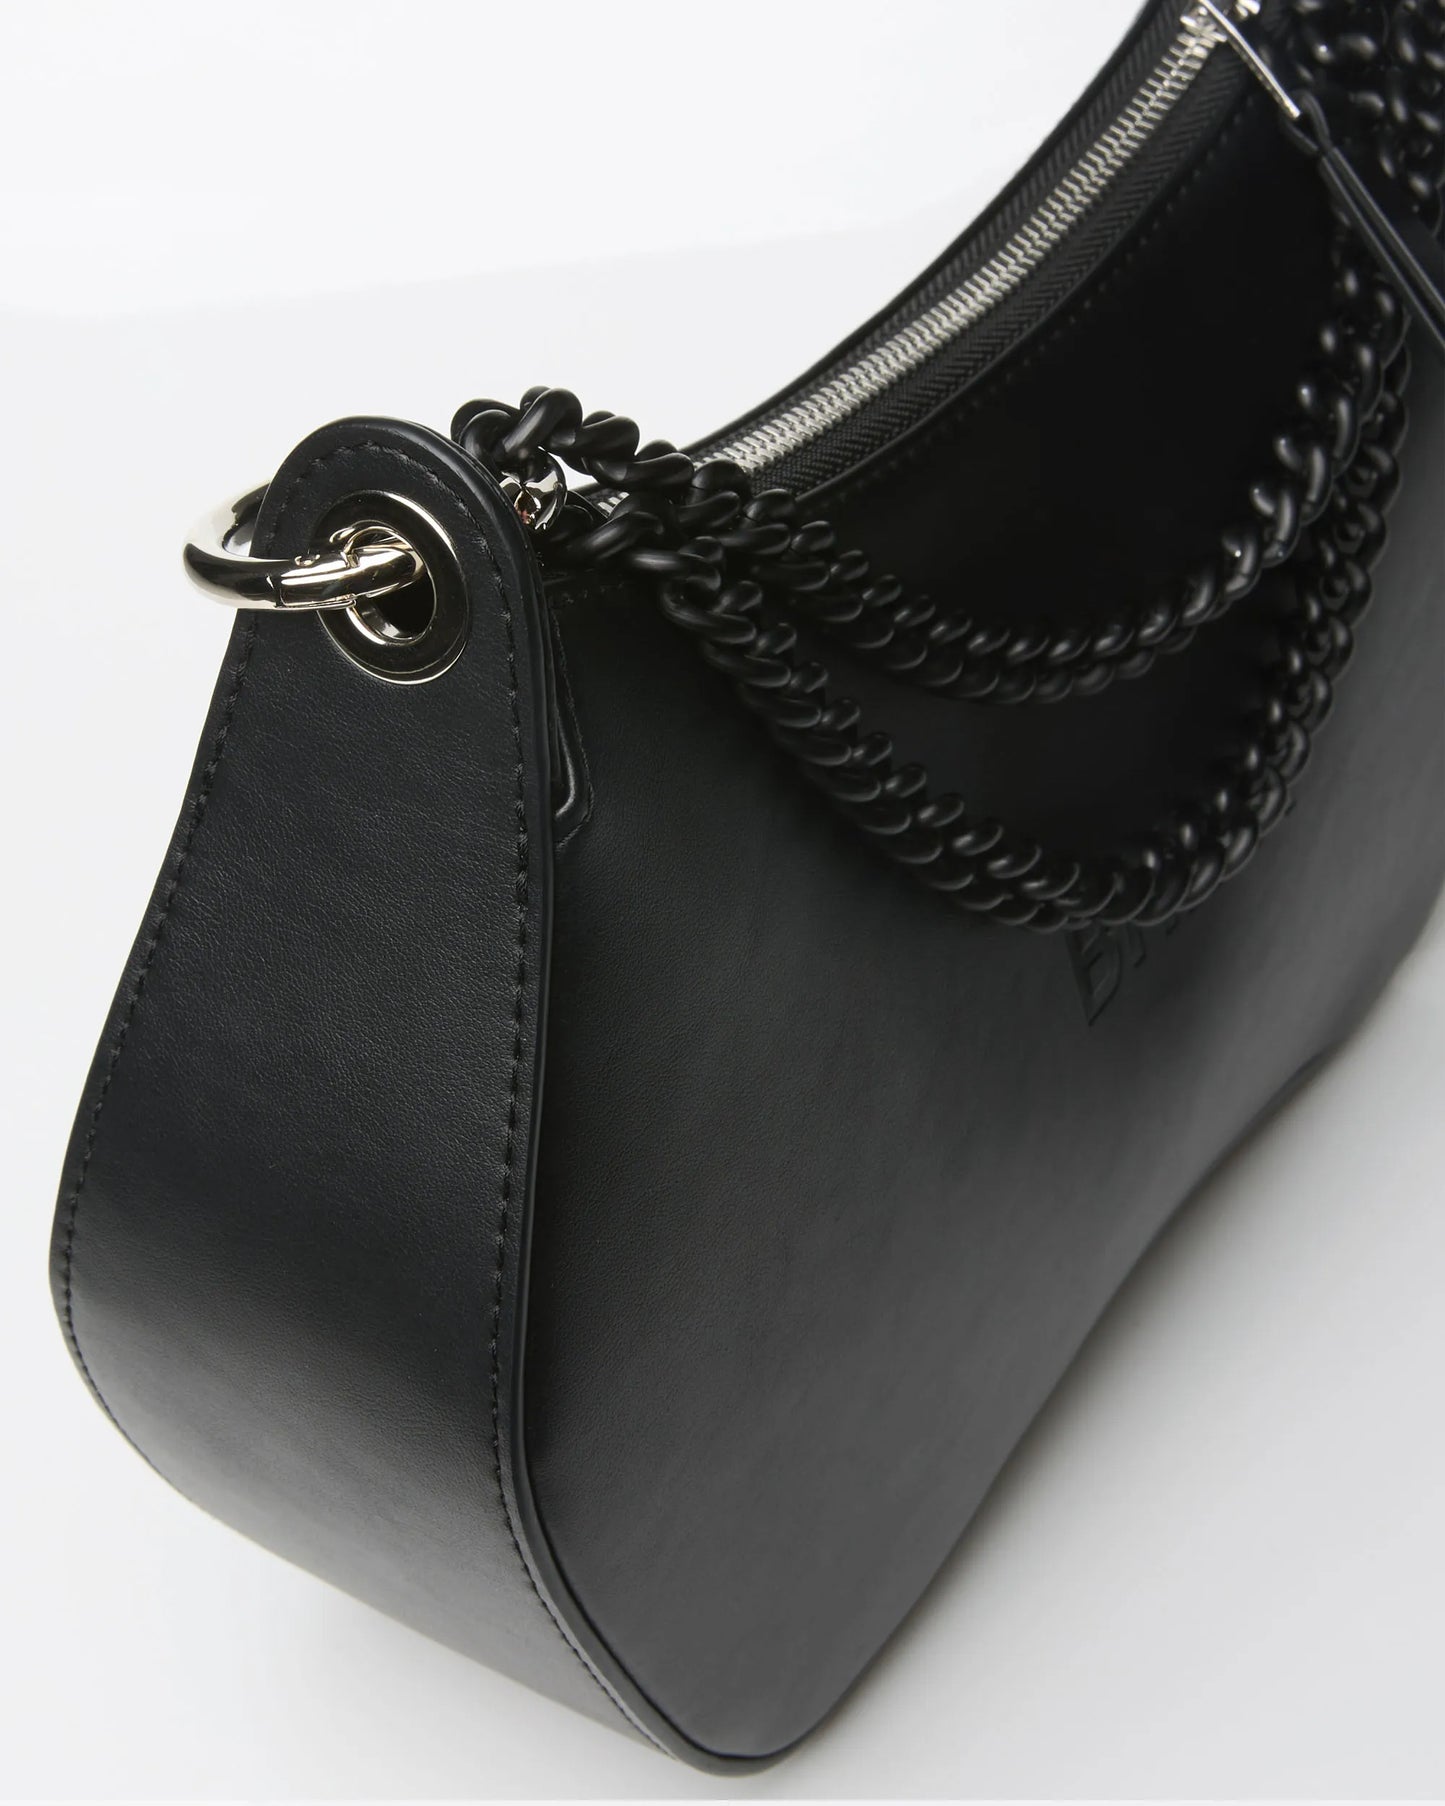 Noir BHMA Bag of grape-based vegan leather